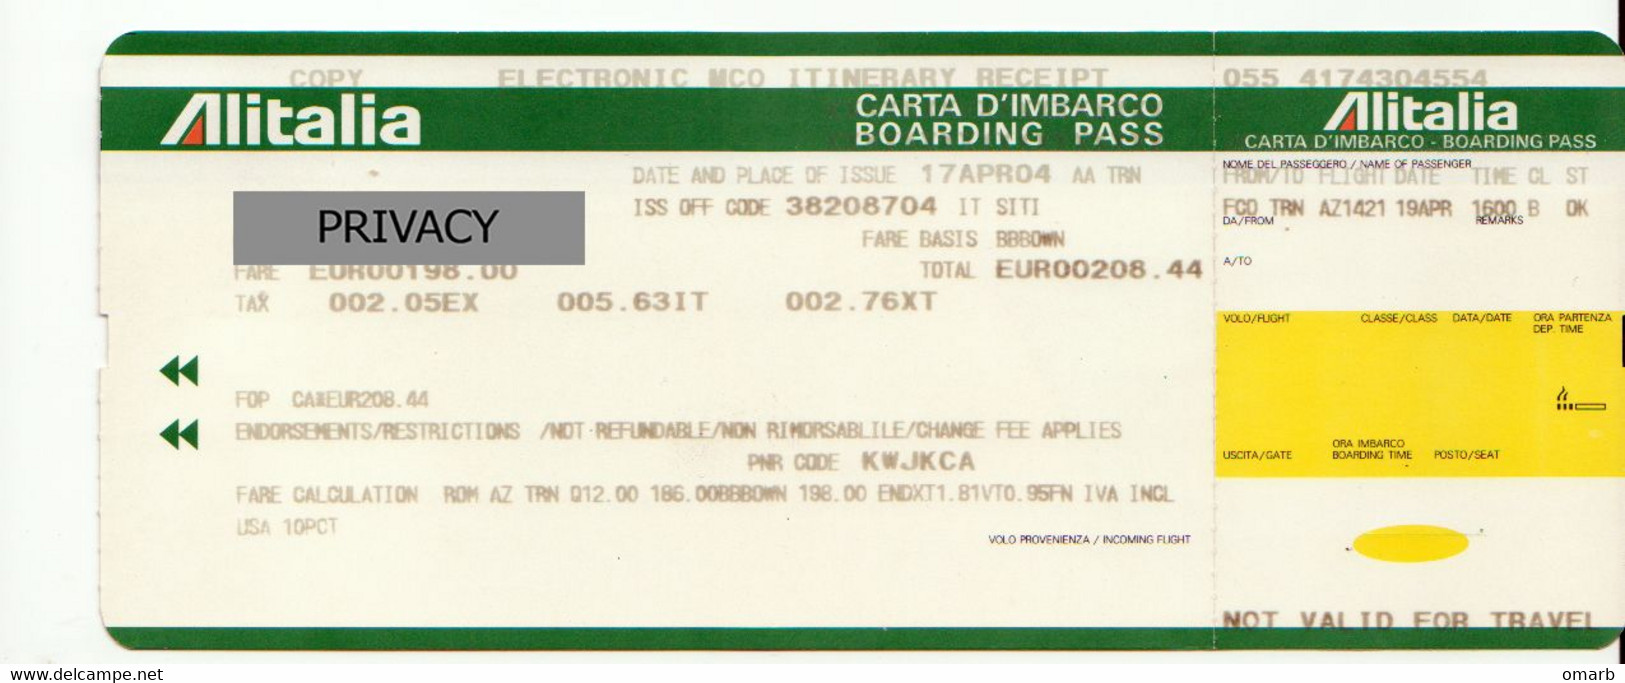 alt1134 Alitalia airlines airways Billet avion ticket biglietto aereo  boarding pass itinerary receipt TRN FCO